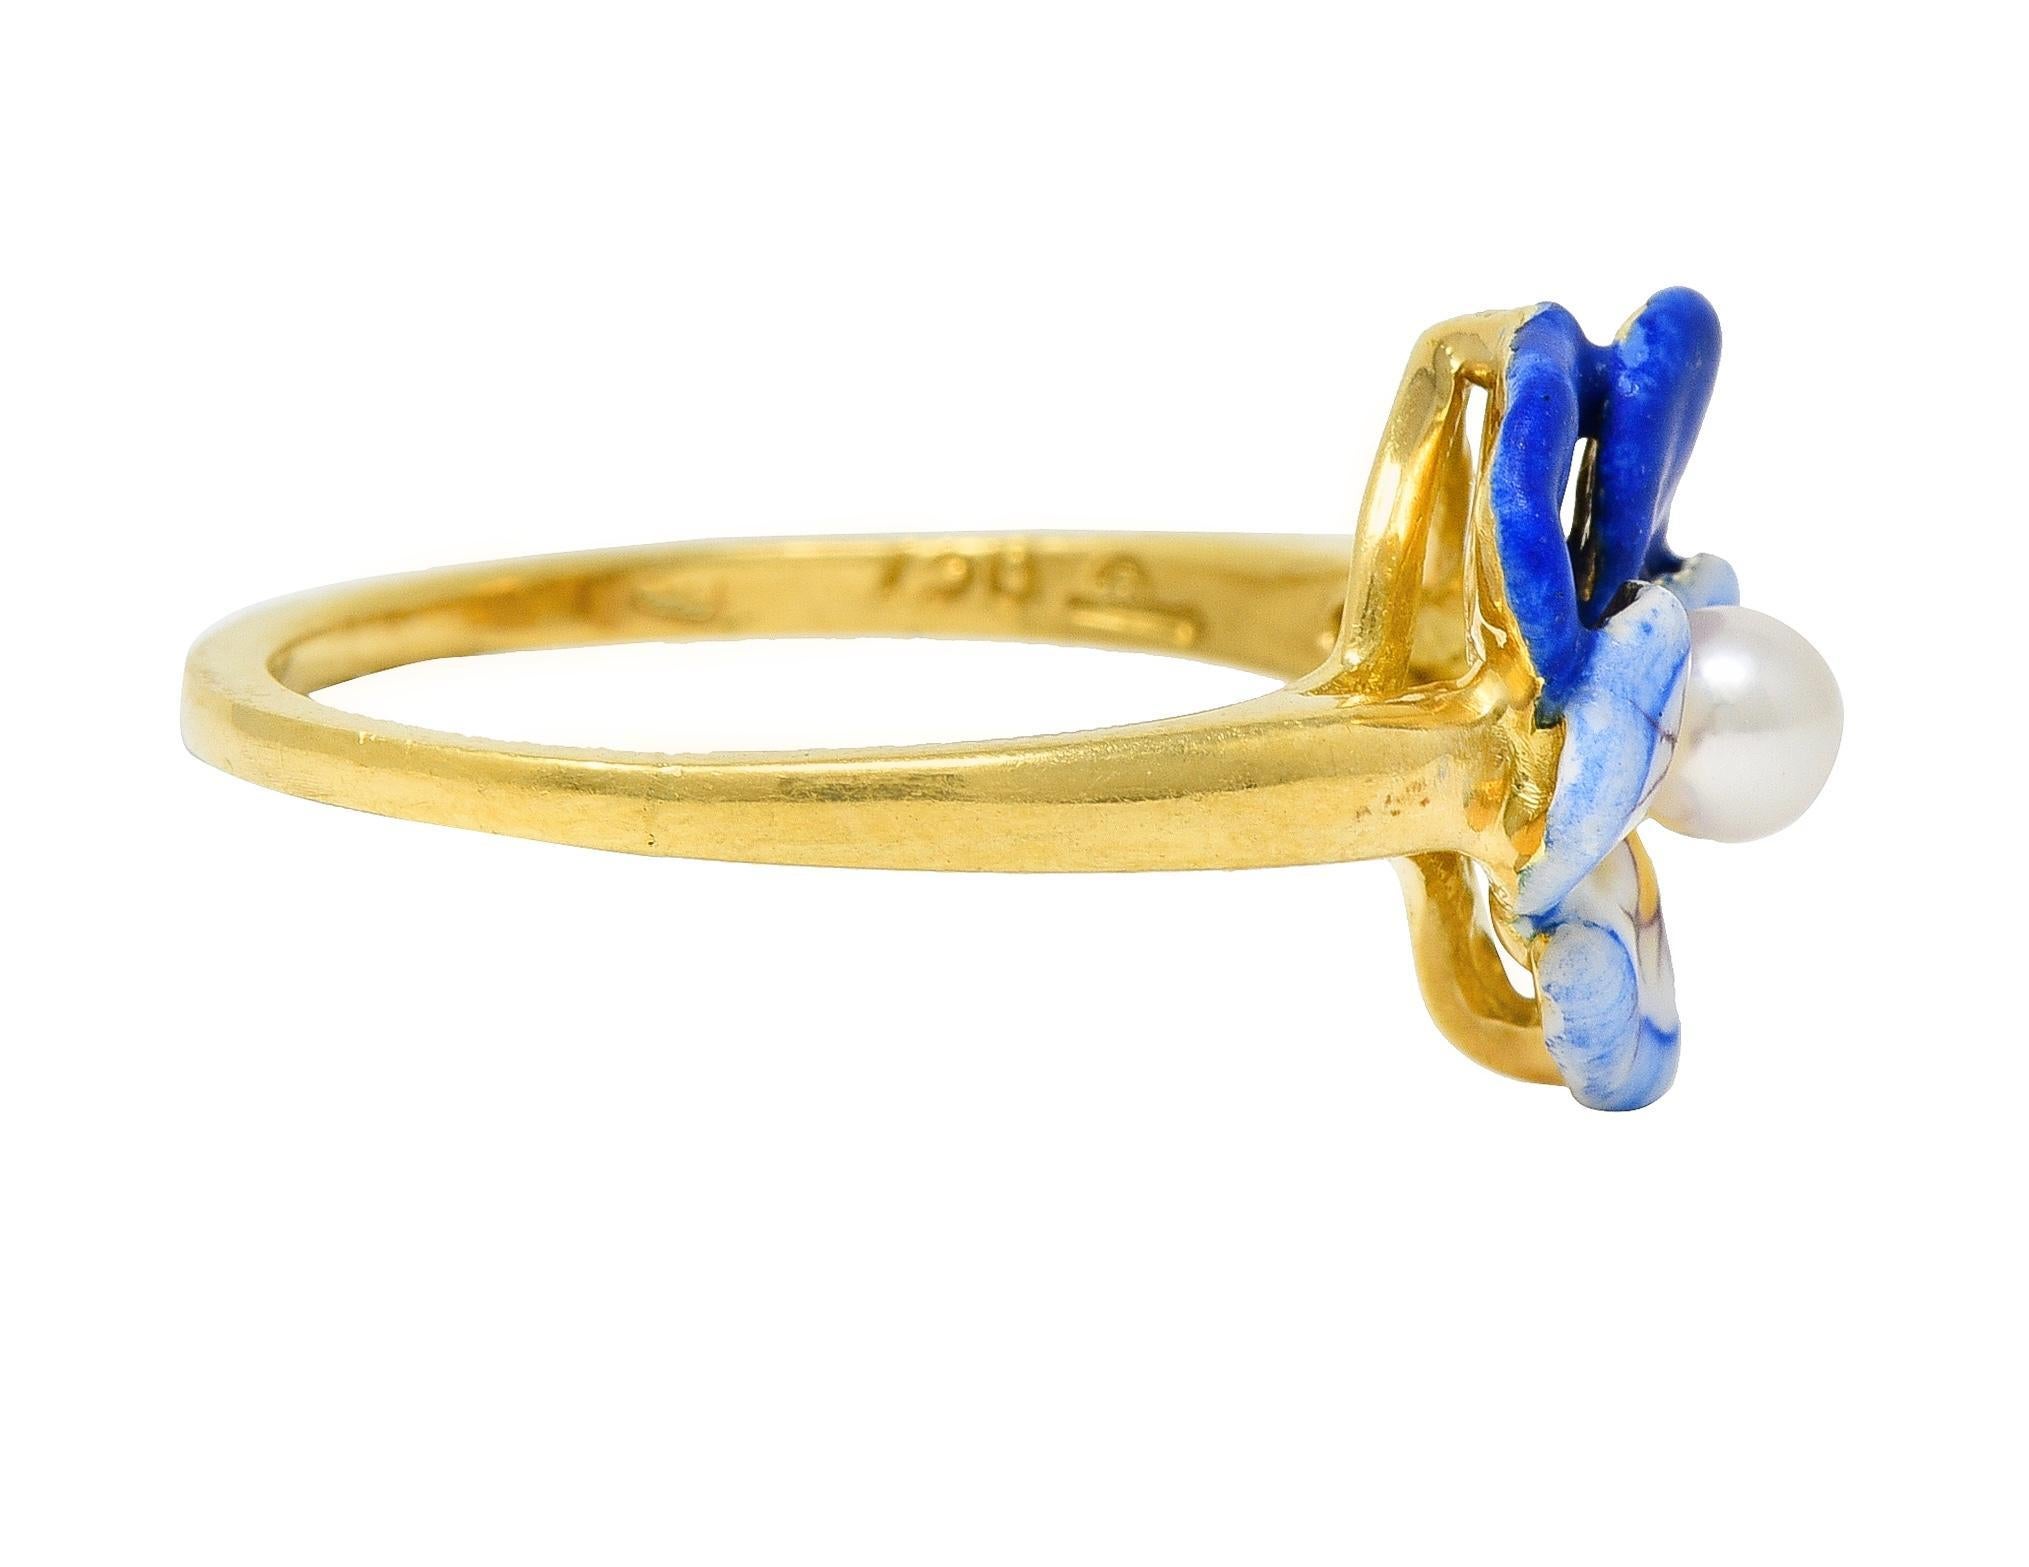 Uncut Larter & Sons Art Nouveau Pearl Enamel 18 Karat Yellow Gold Pansy Ring